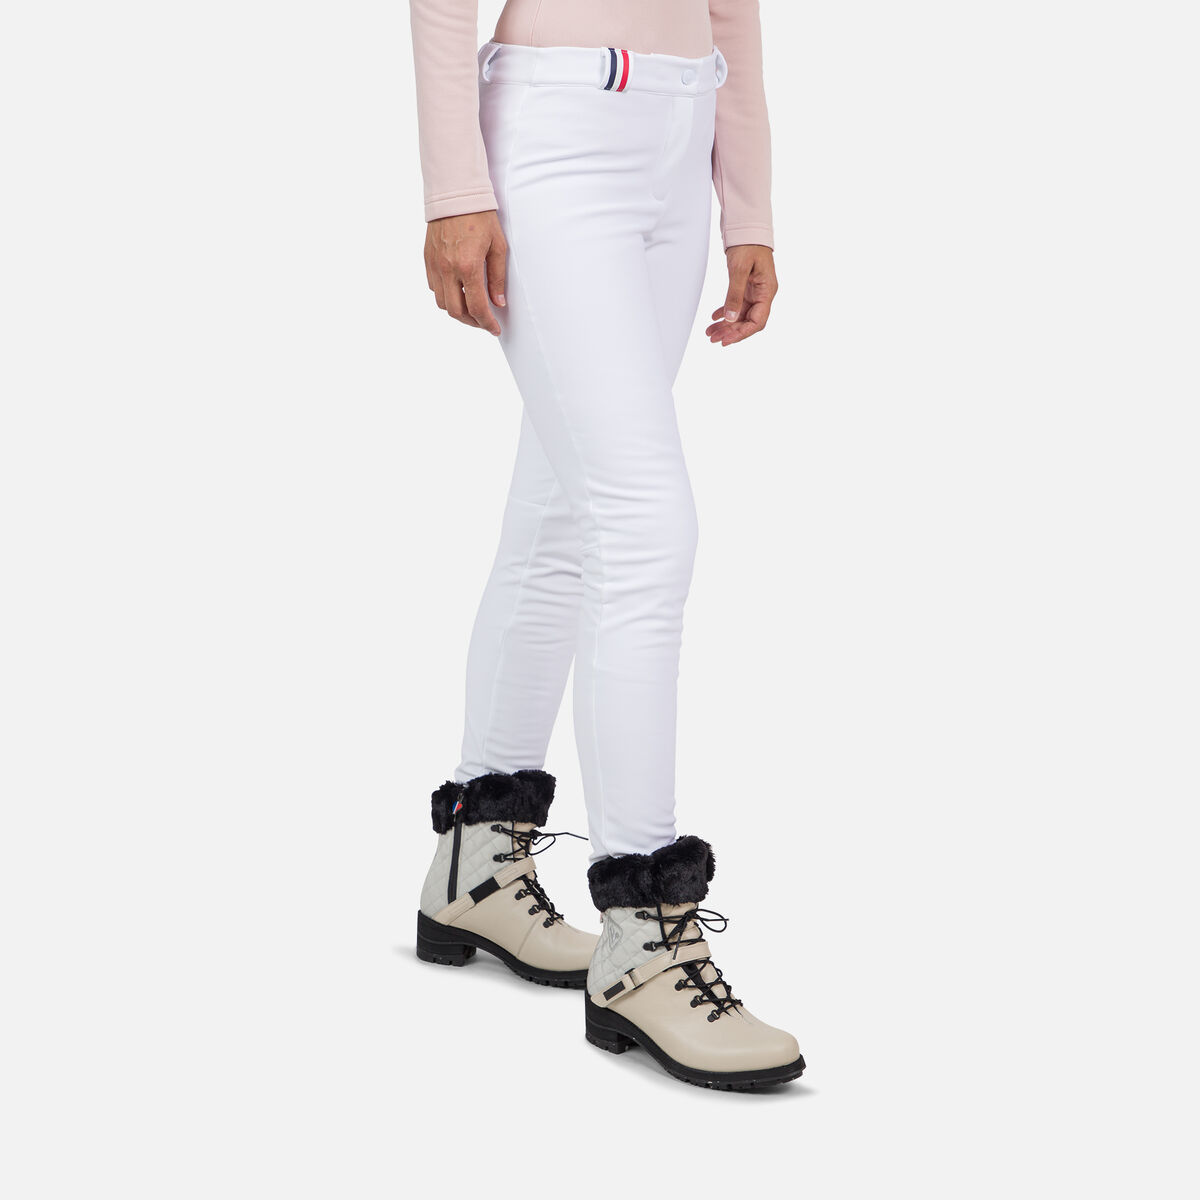 Rossignol Women's Ski Fuseau Pants white